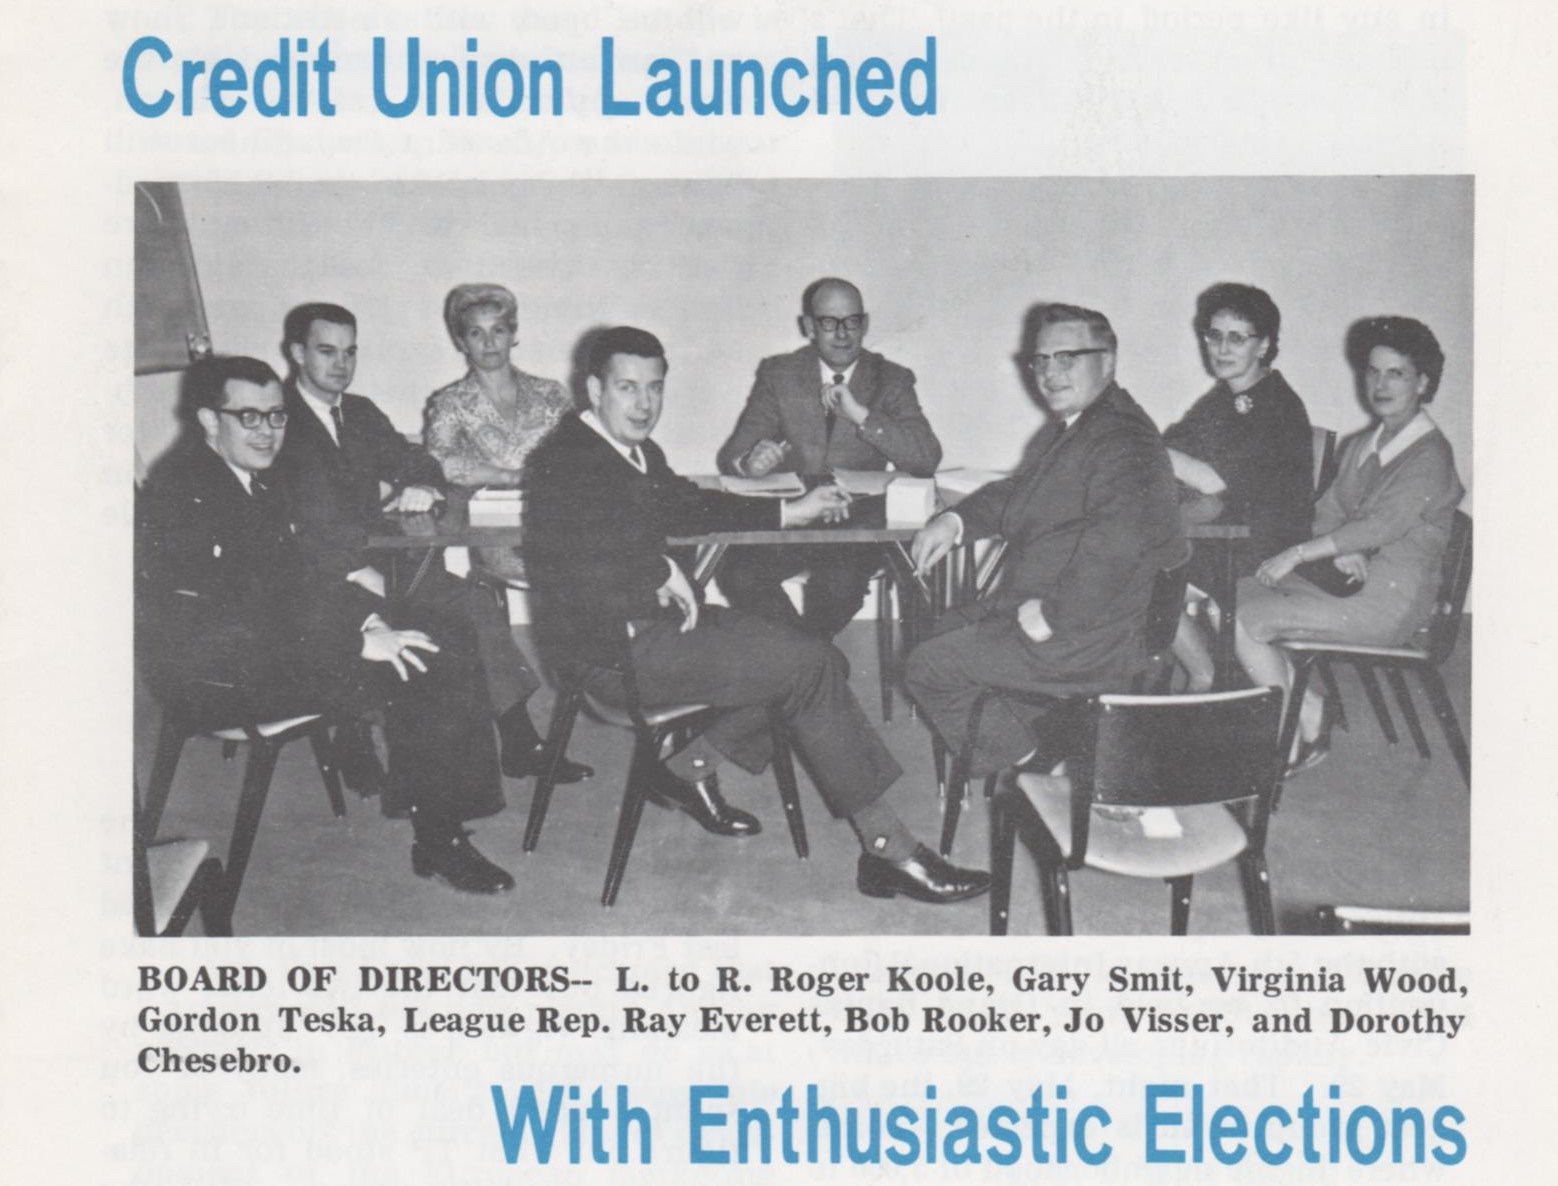 old newspaper image of original board members